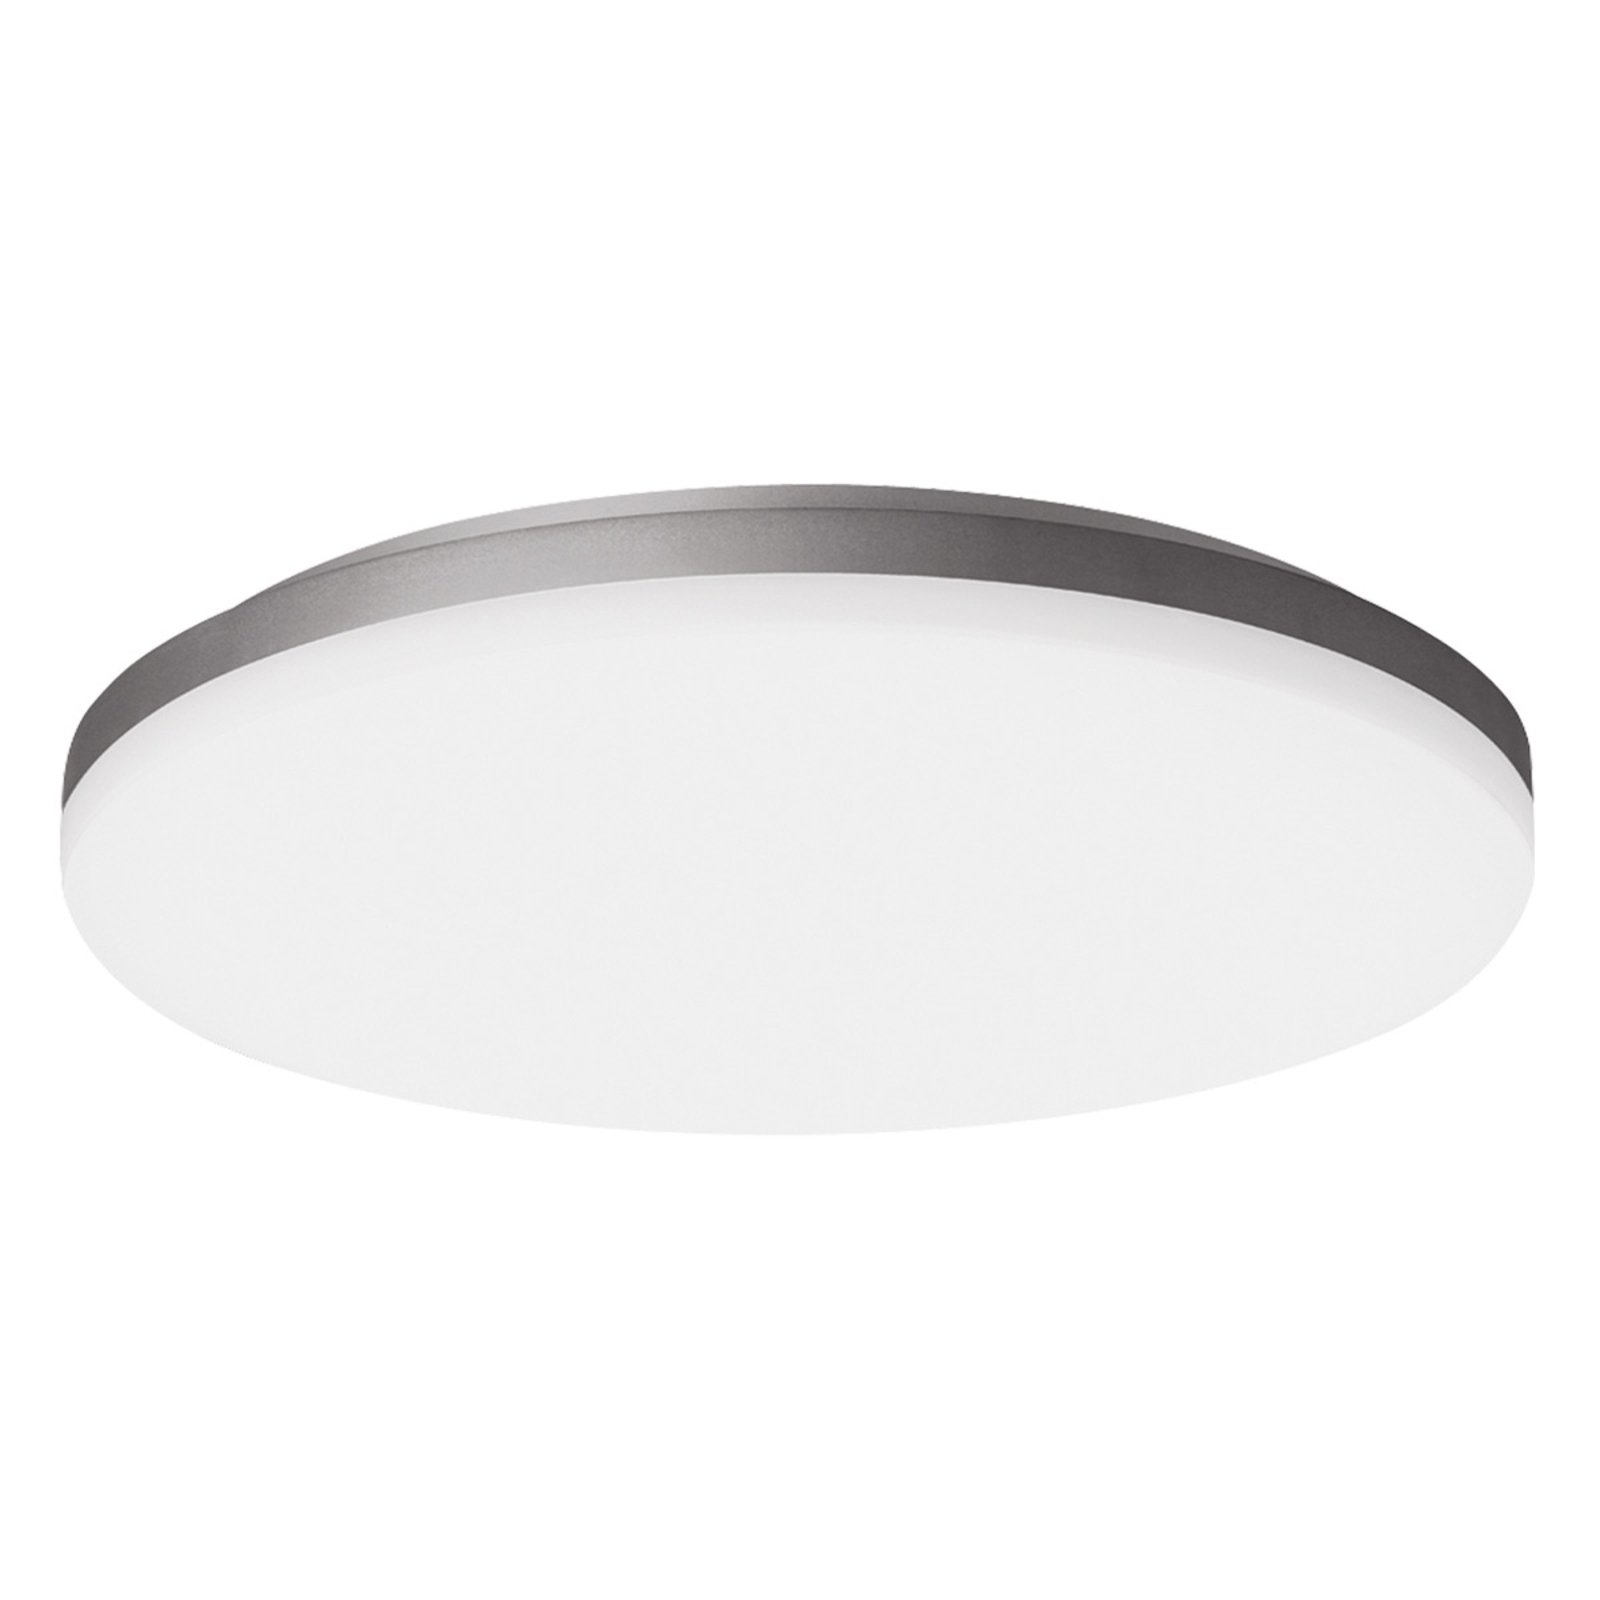 LED ceiling light WL400 round plastic 28W Ø40cm